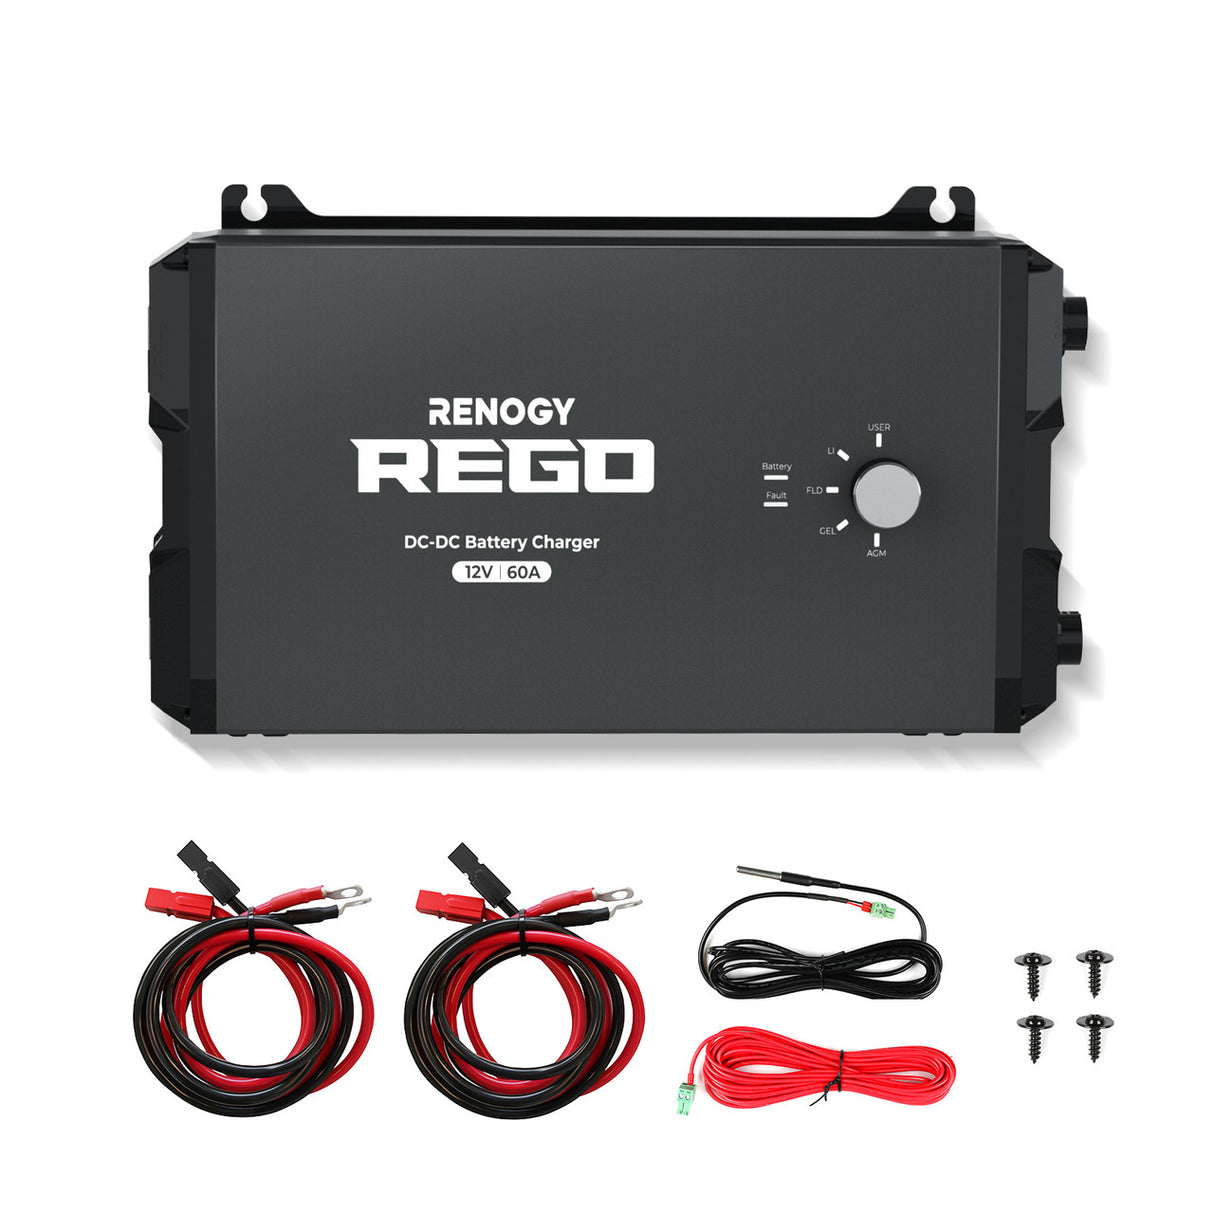 REGO 12V 60A DC-DC Battery Charger - RENOGY